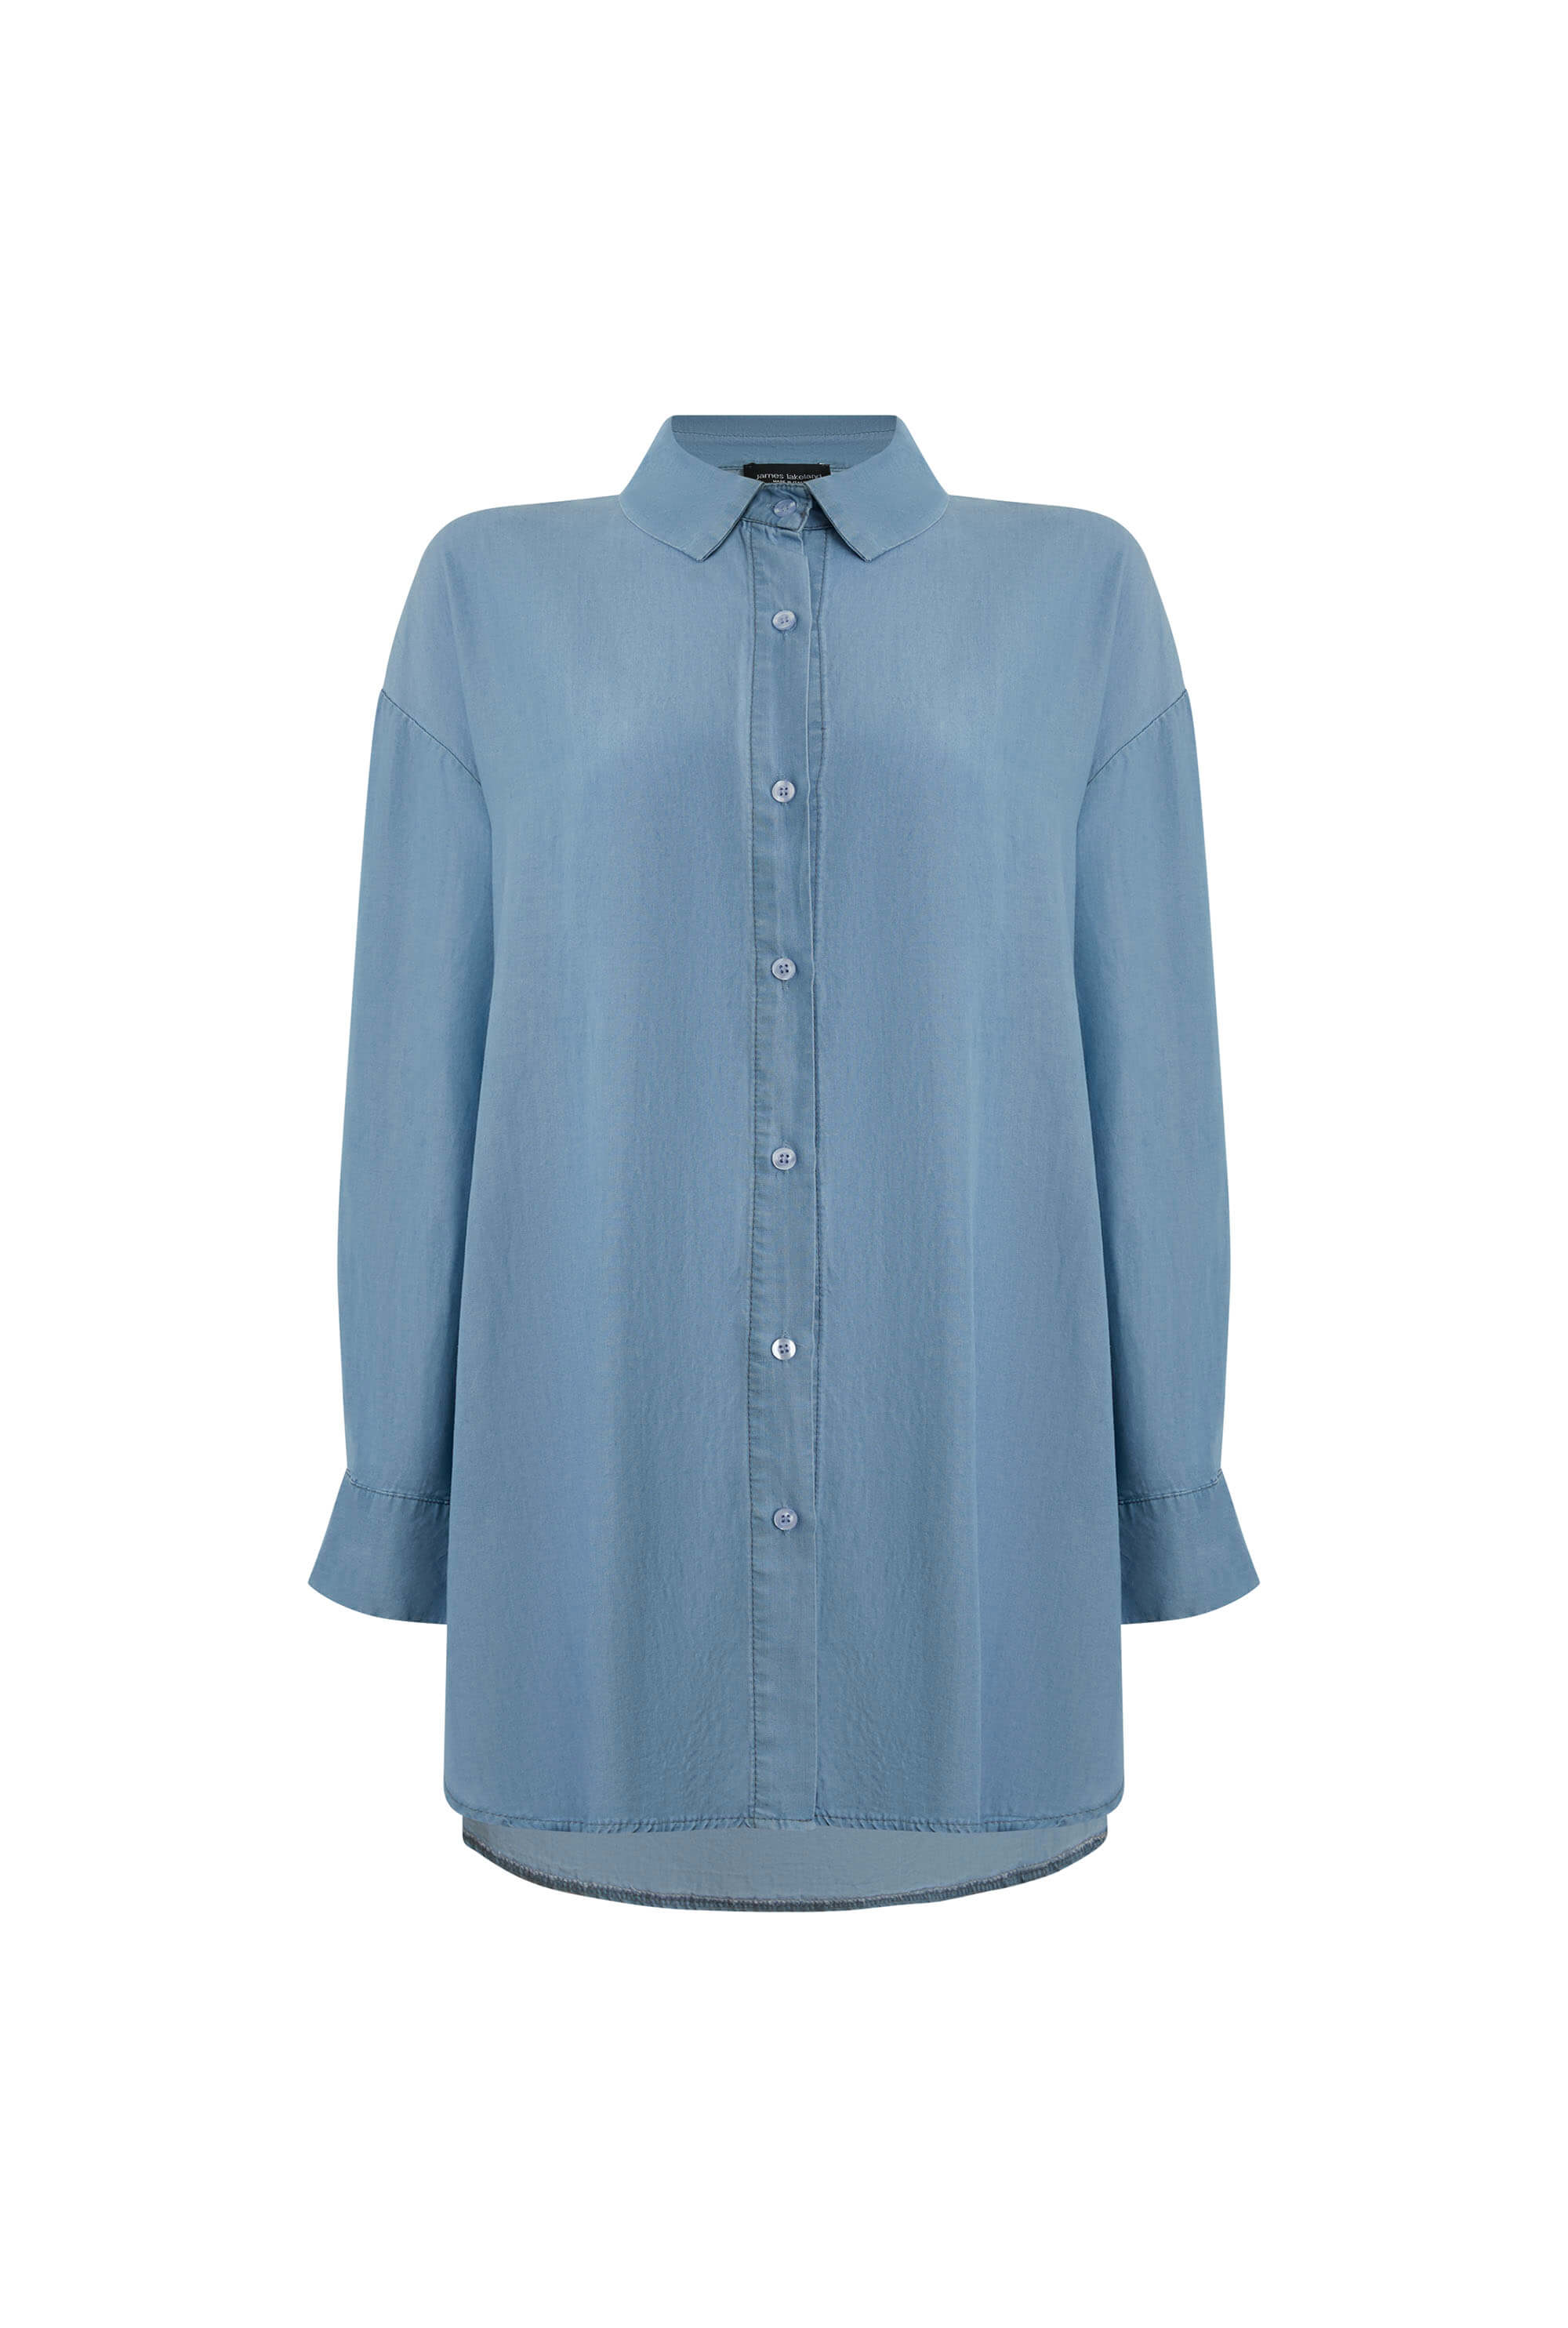 James Lakeland Women's Light Blue Denim Shirt